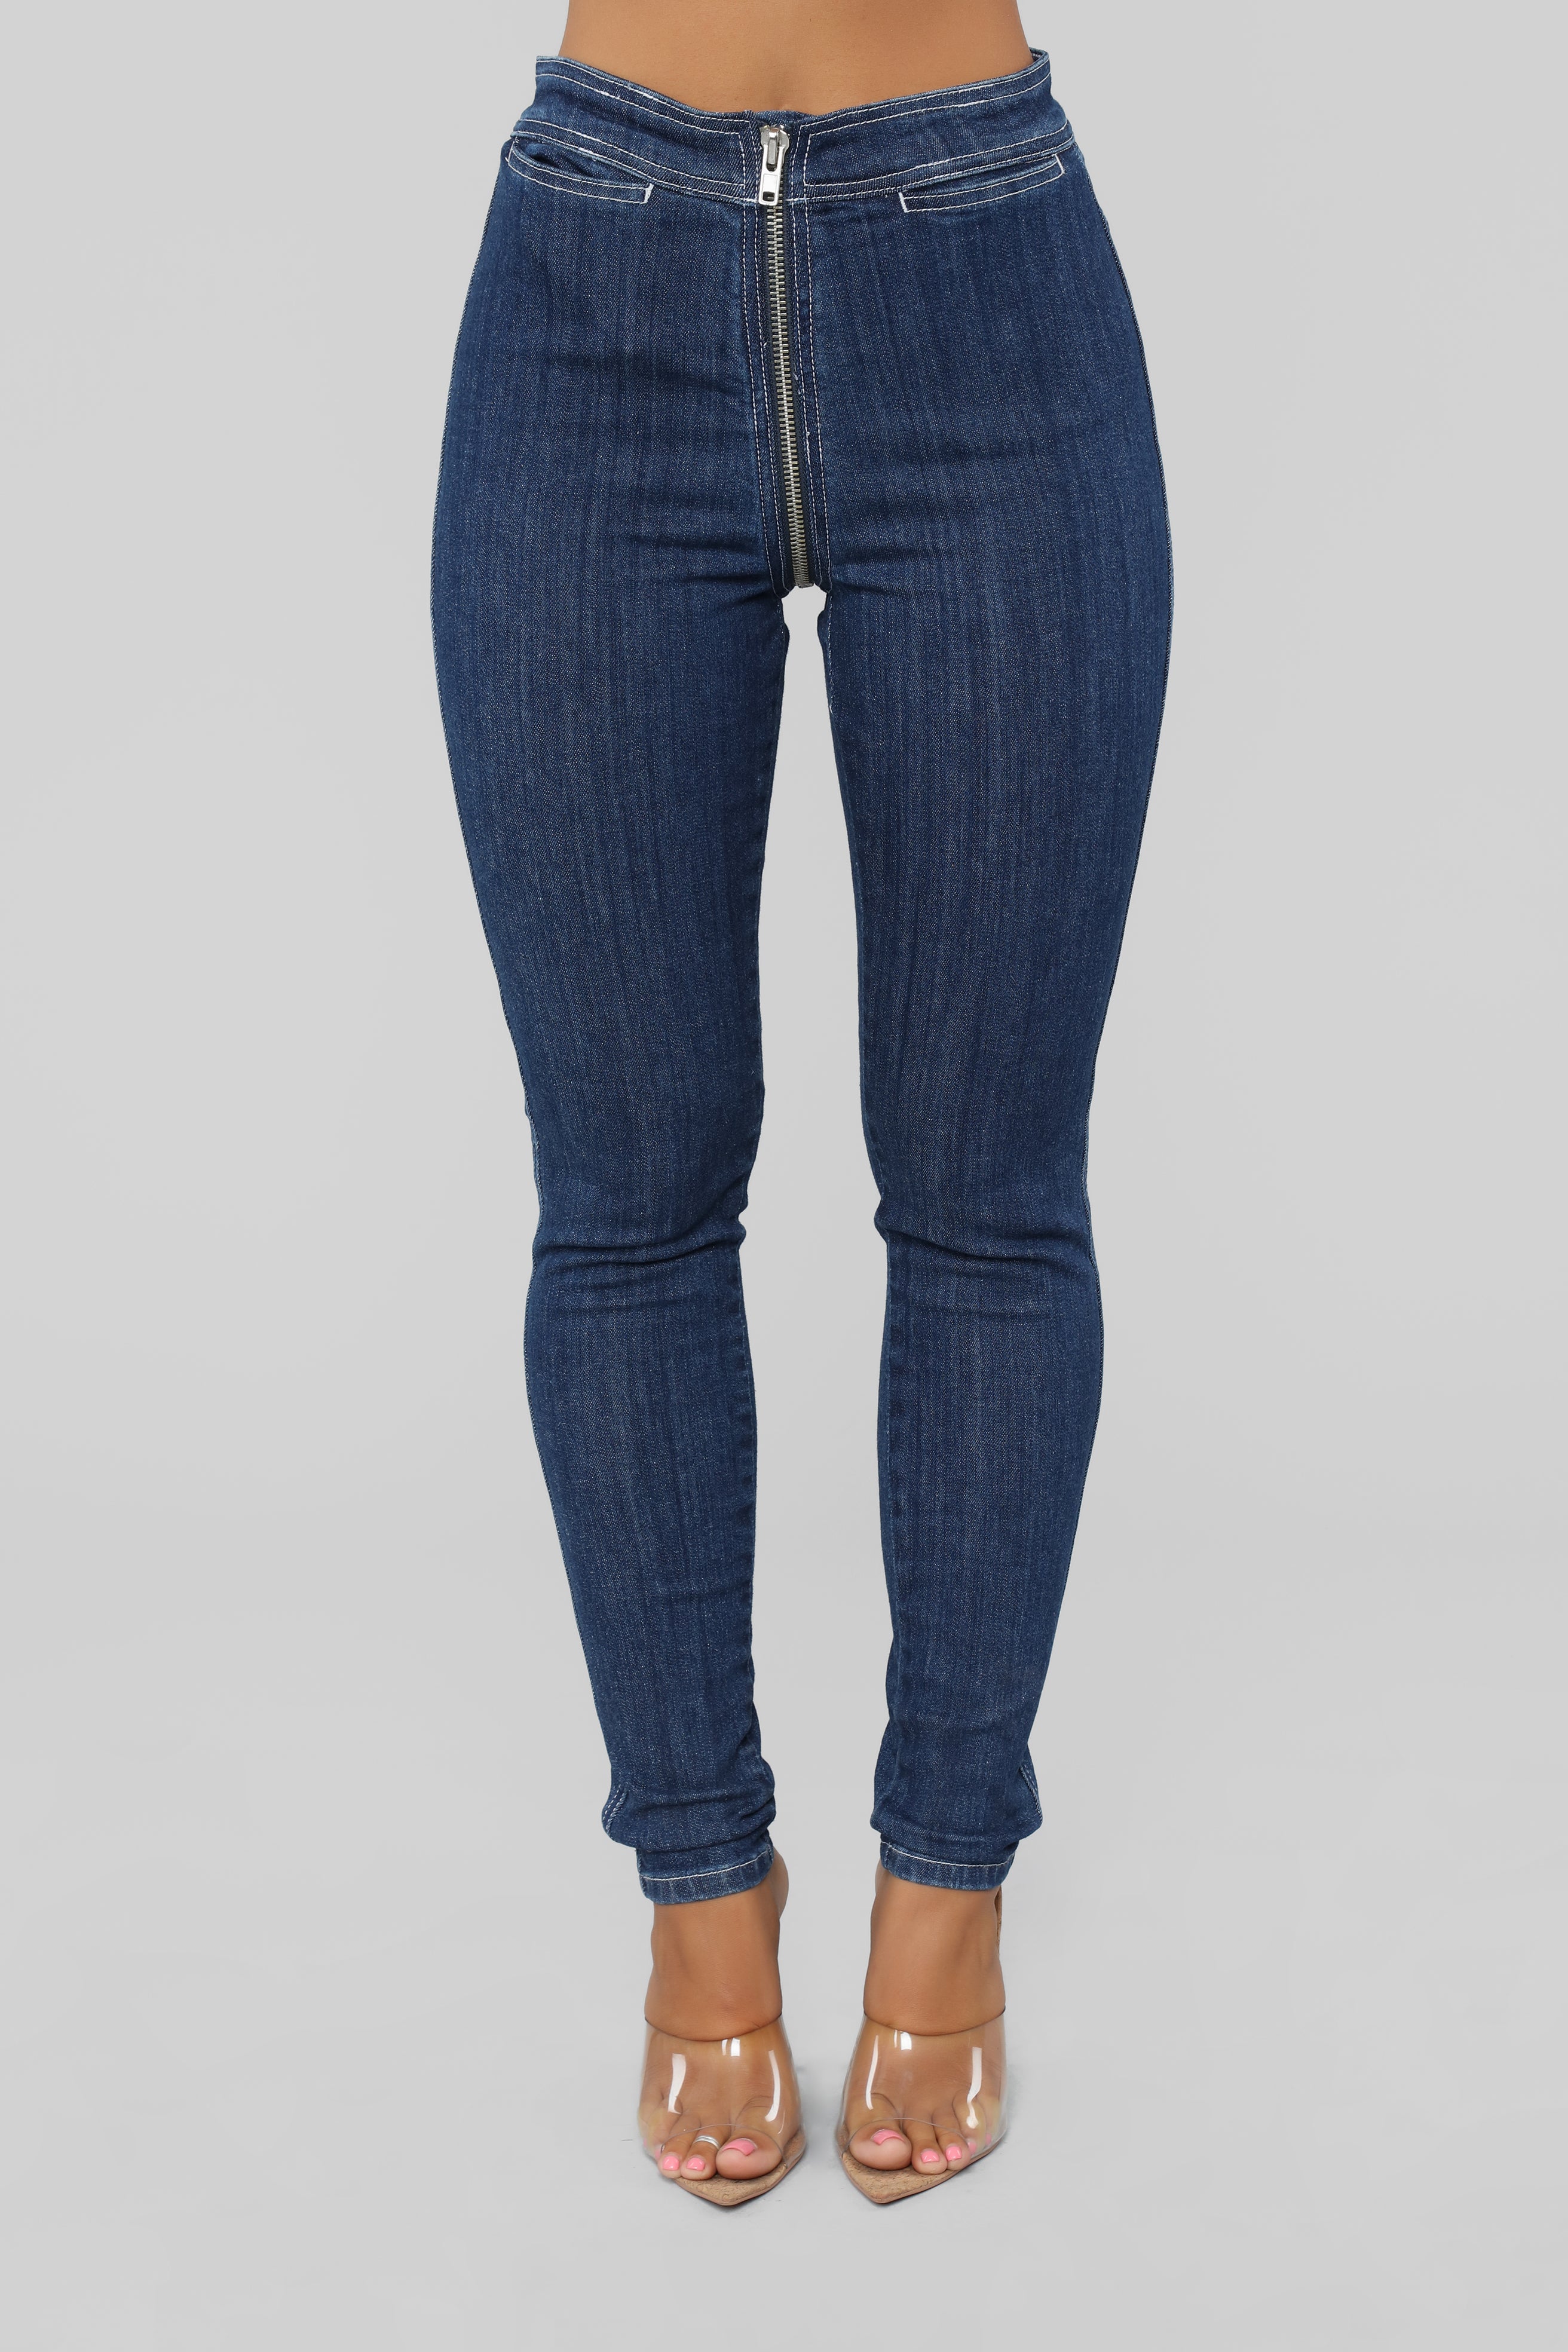 Just The Zip Skinny Jeans - Denim | Fashion Nova, Jeans | Fashion Nova